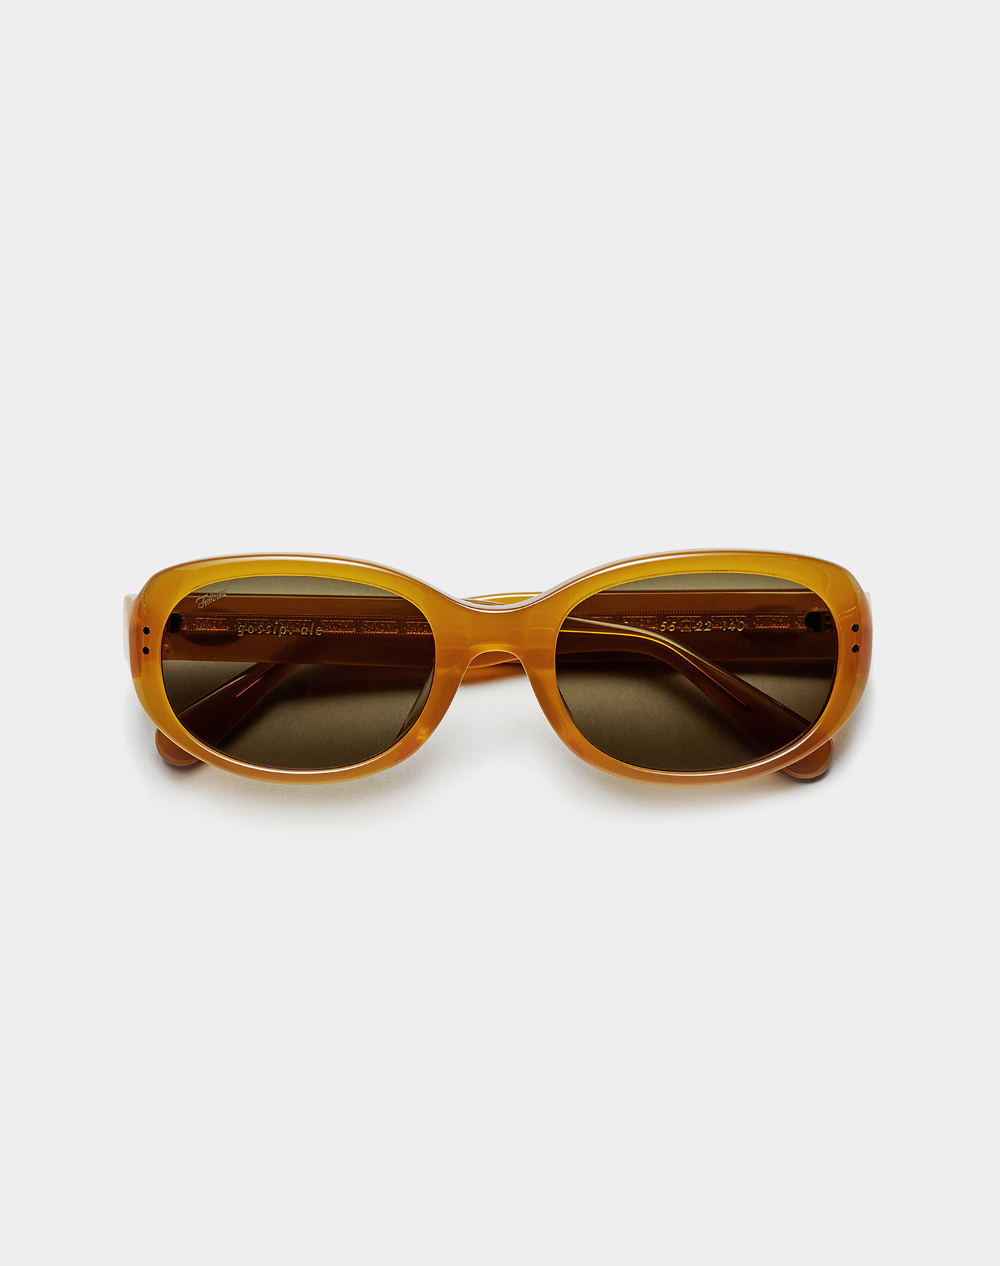 glasses mustard color image-S1L4